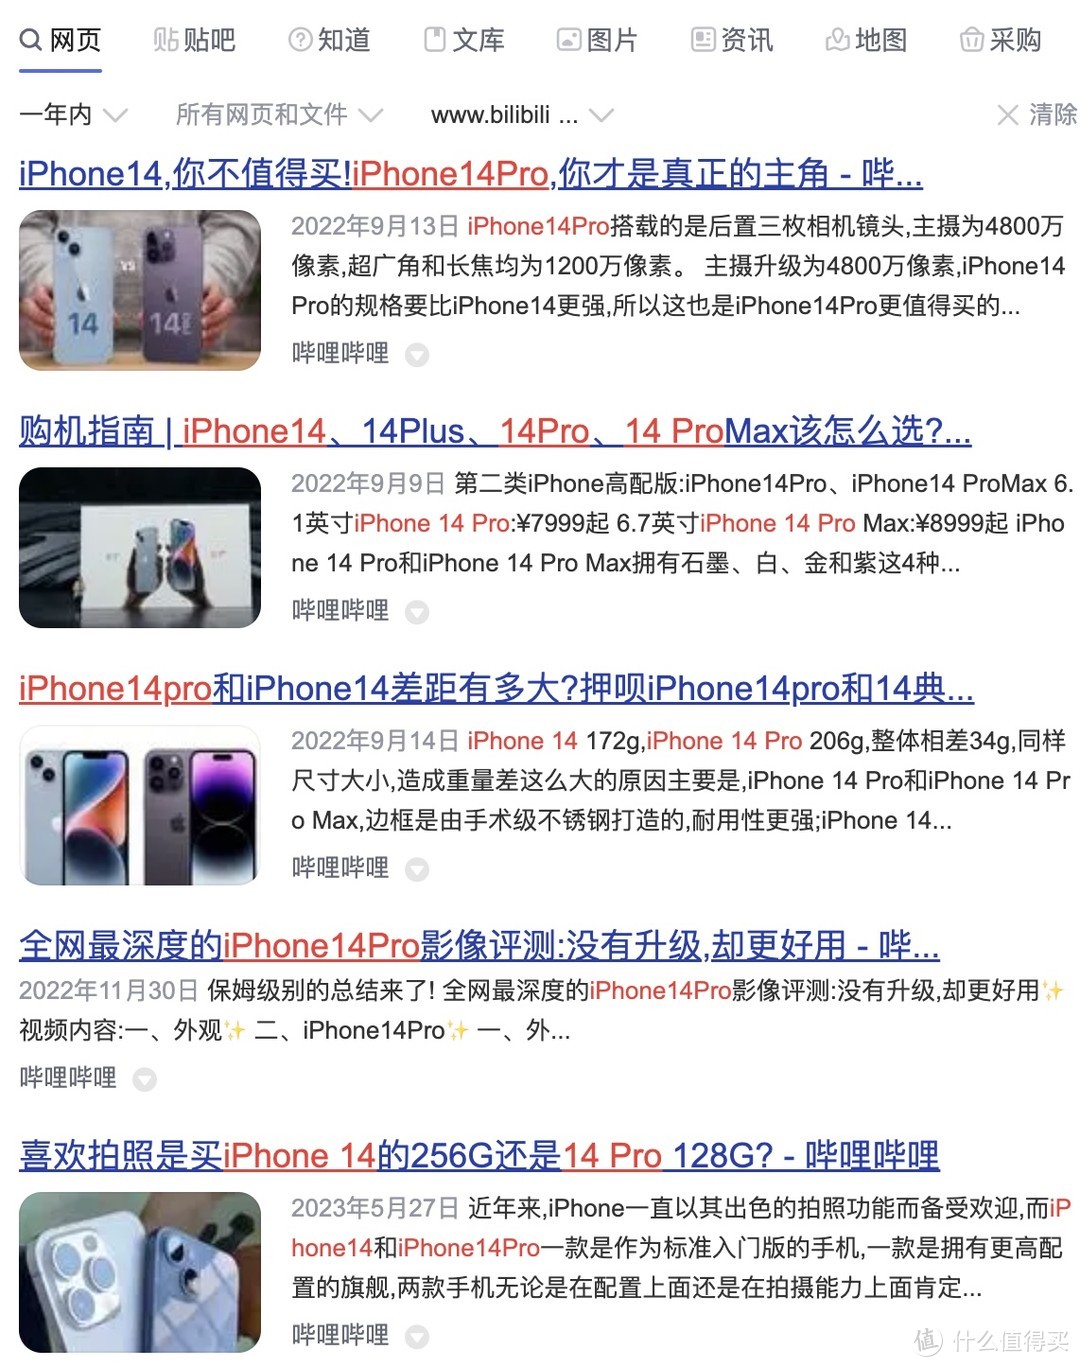 iPhone 14 Pro Max消费者碎碎念